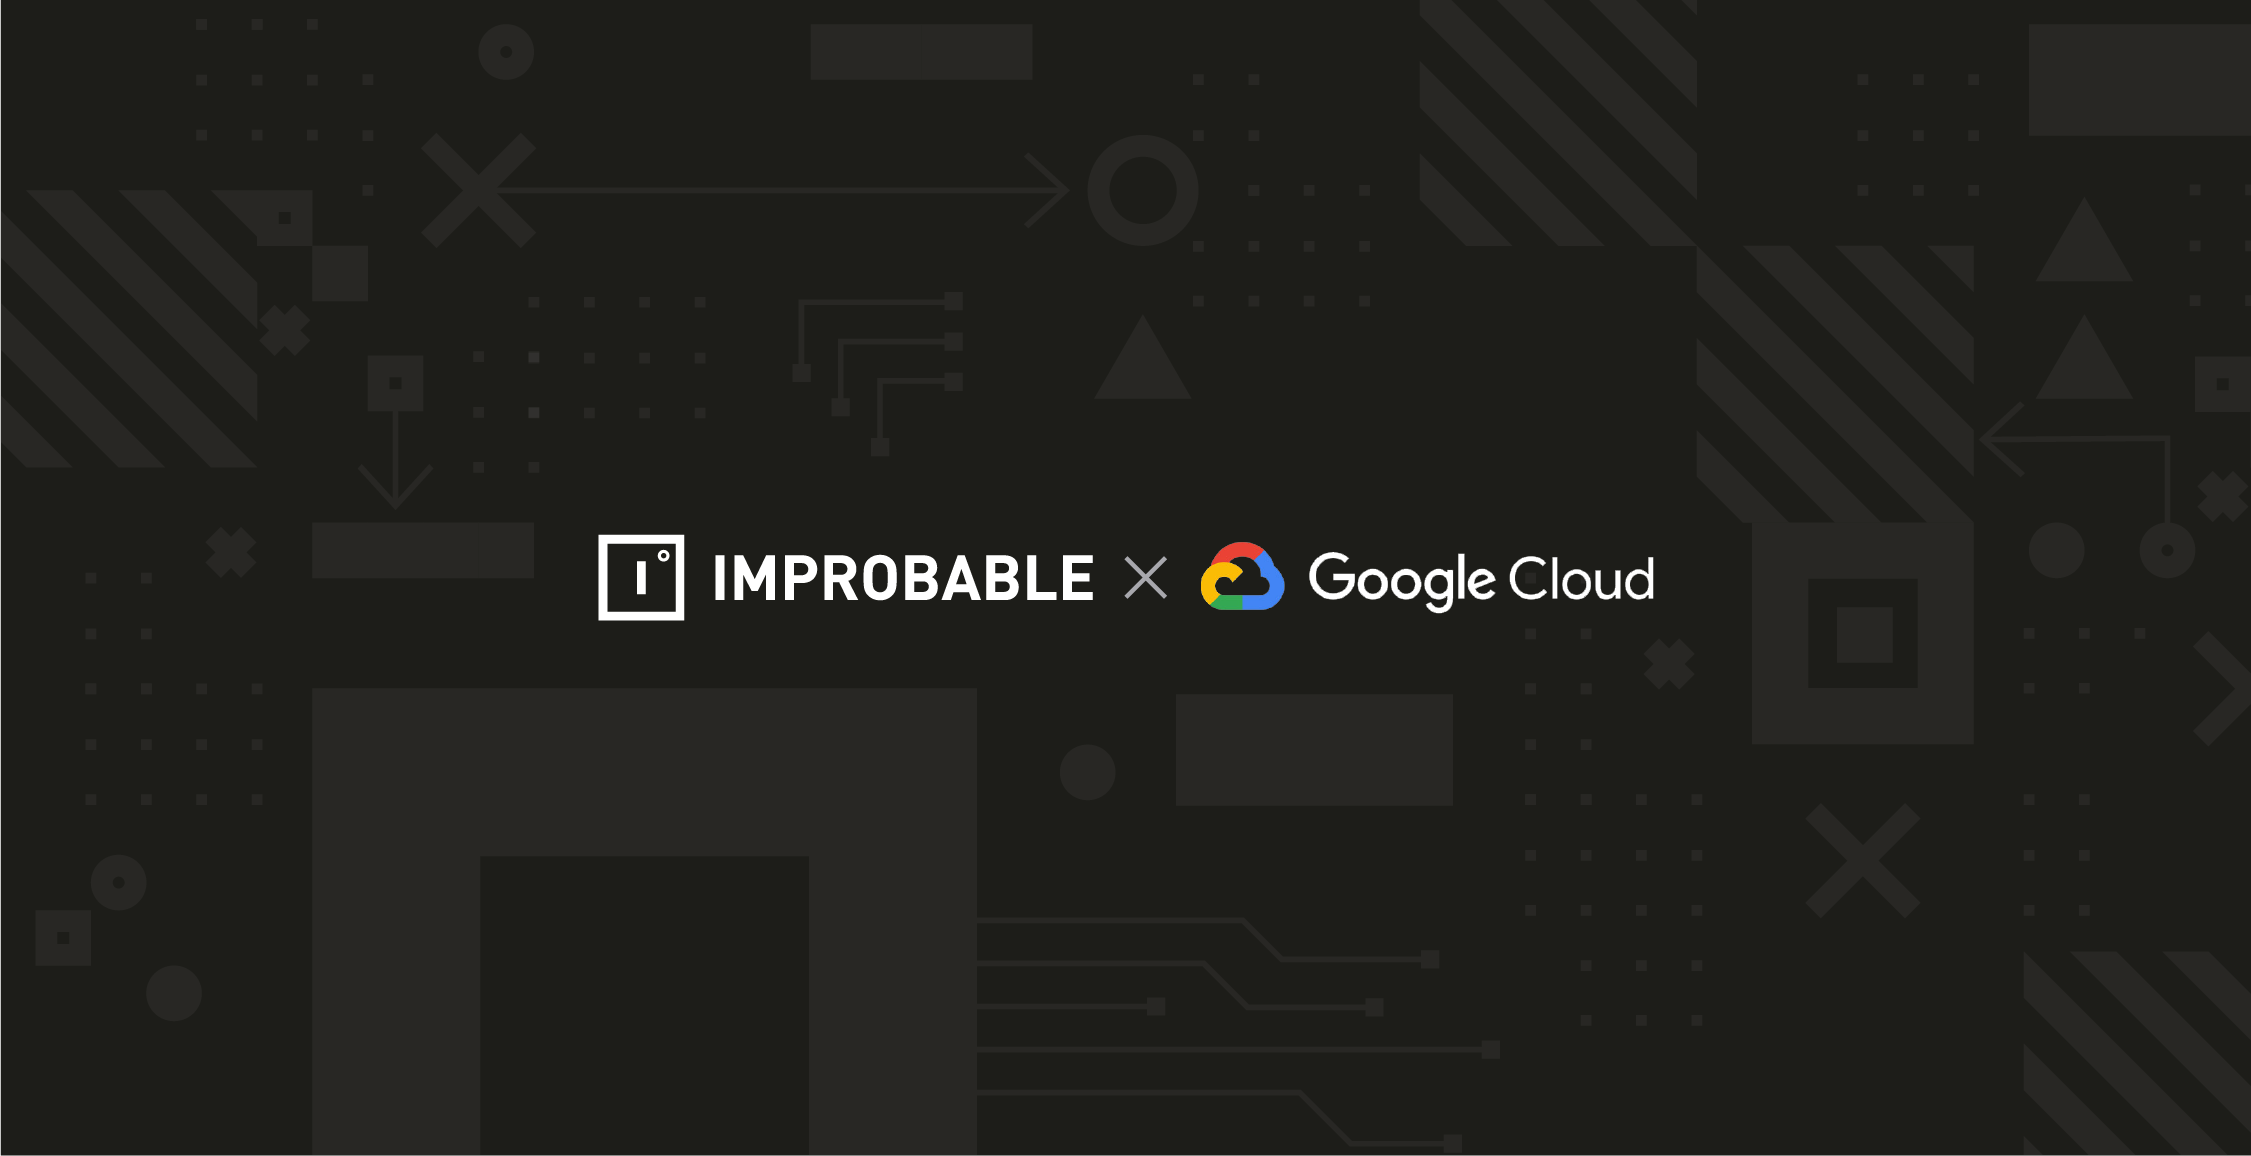 Improbable x Google Cloud text on dark background